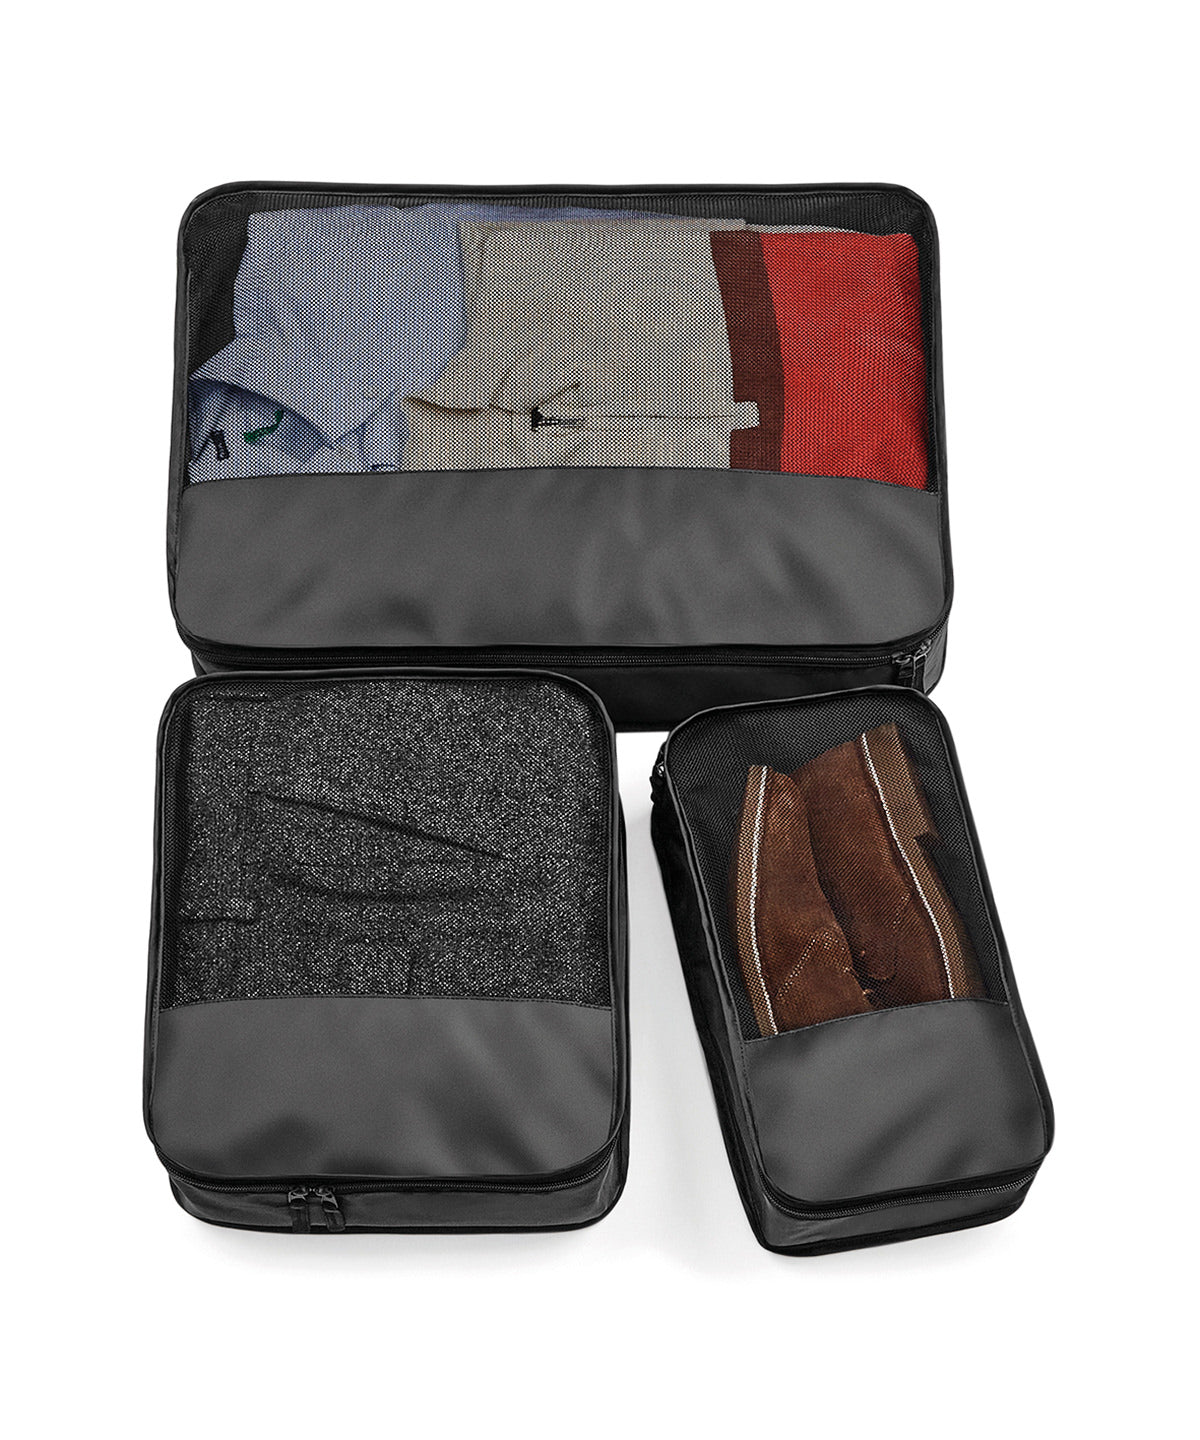 Personalised Travel Sets - Black Bagbase Escape packing cube set (Set of 3)